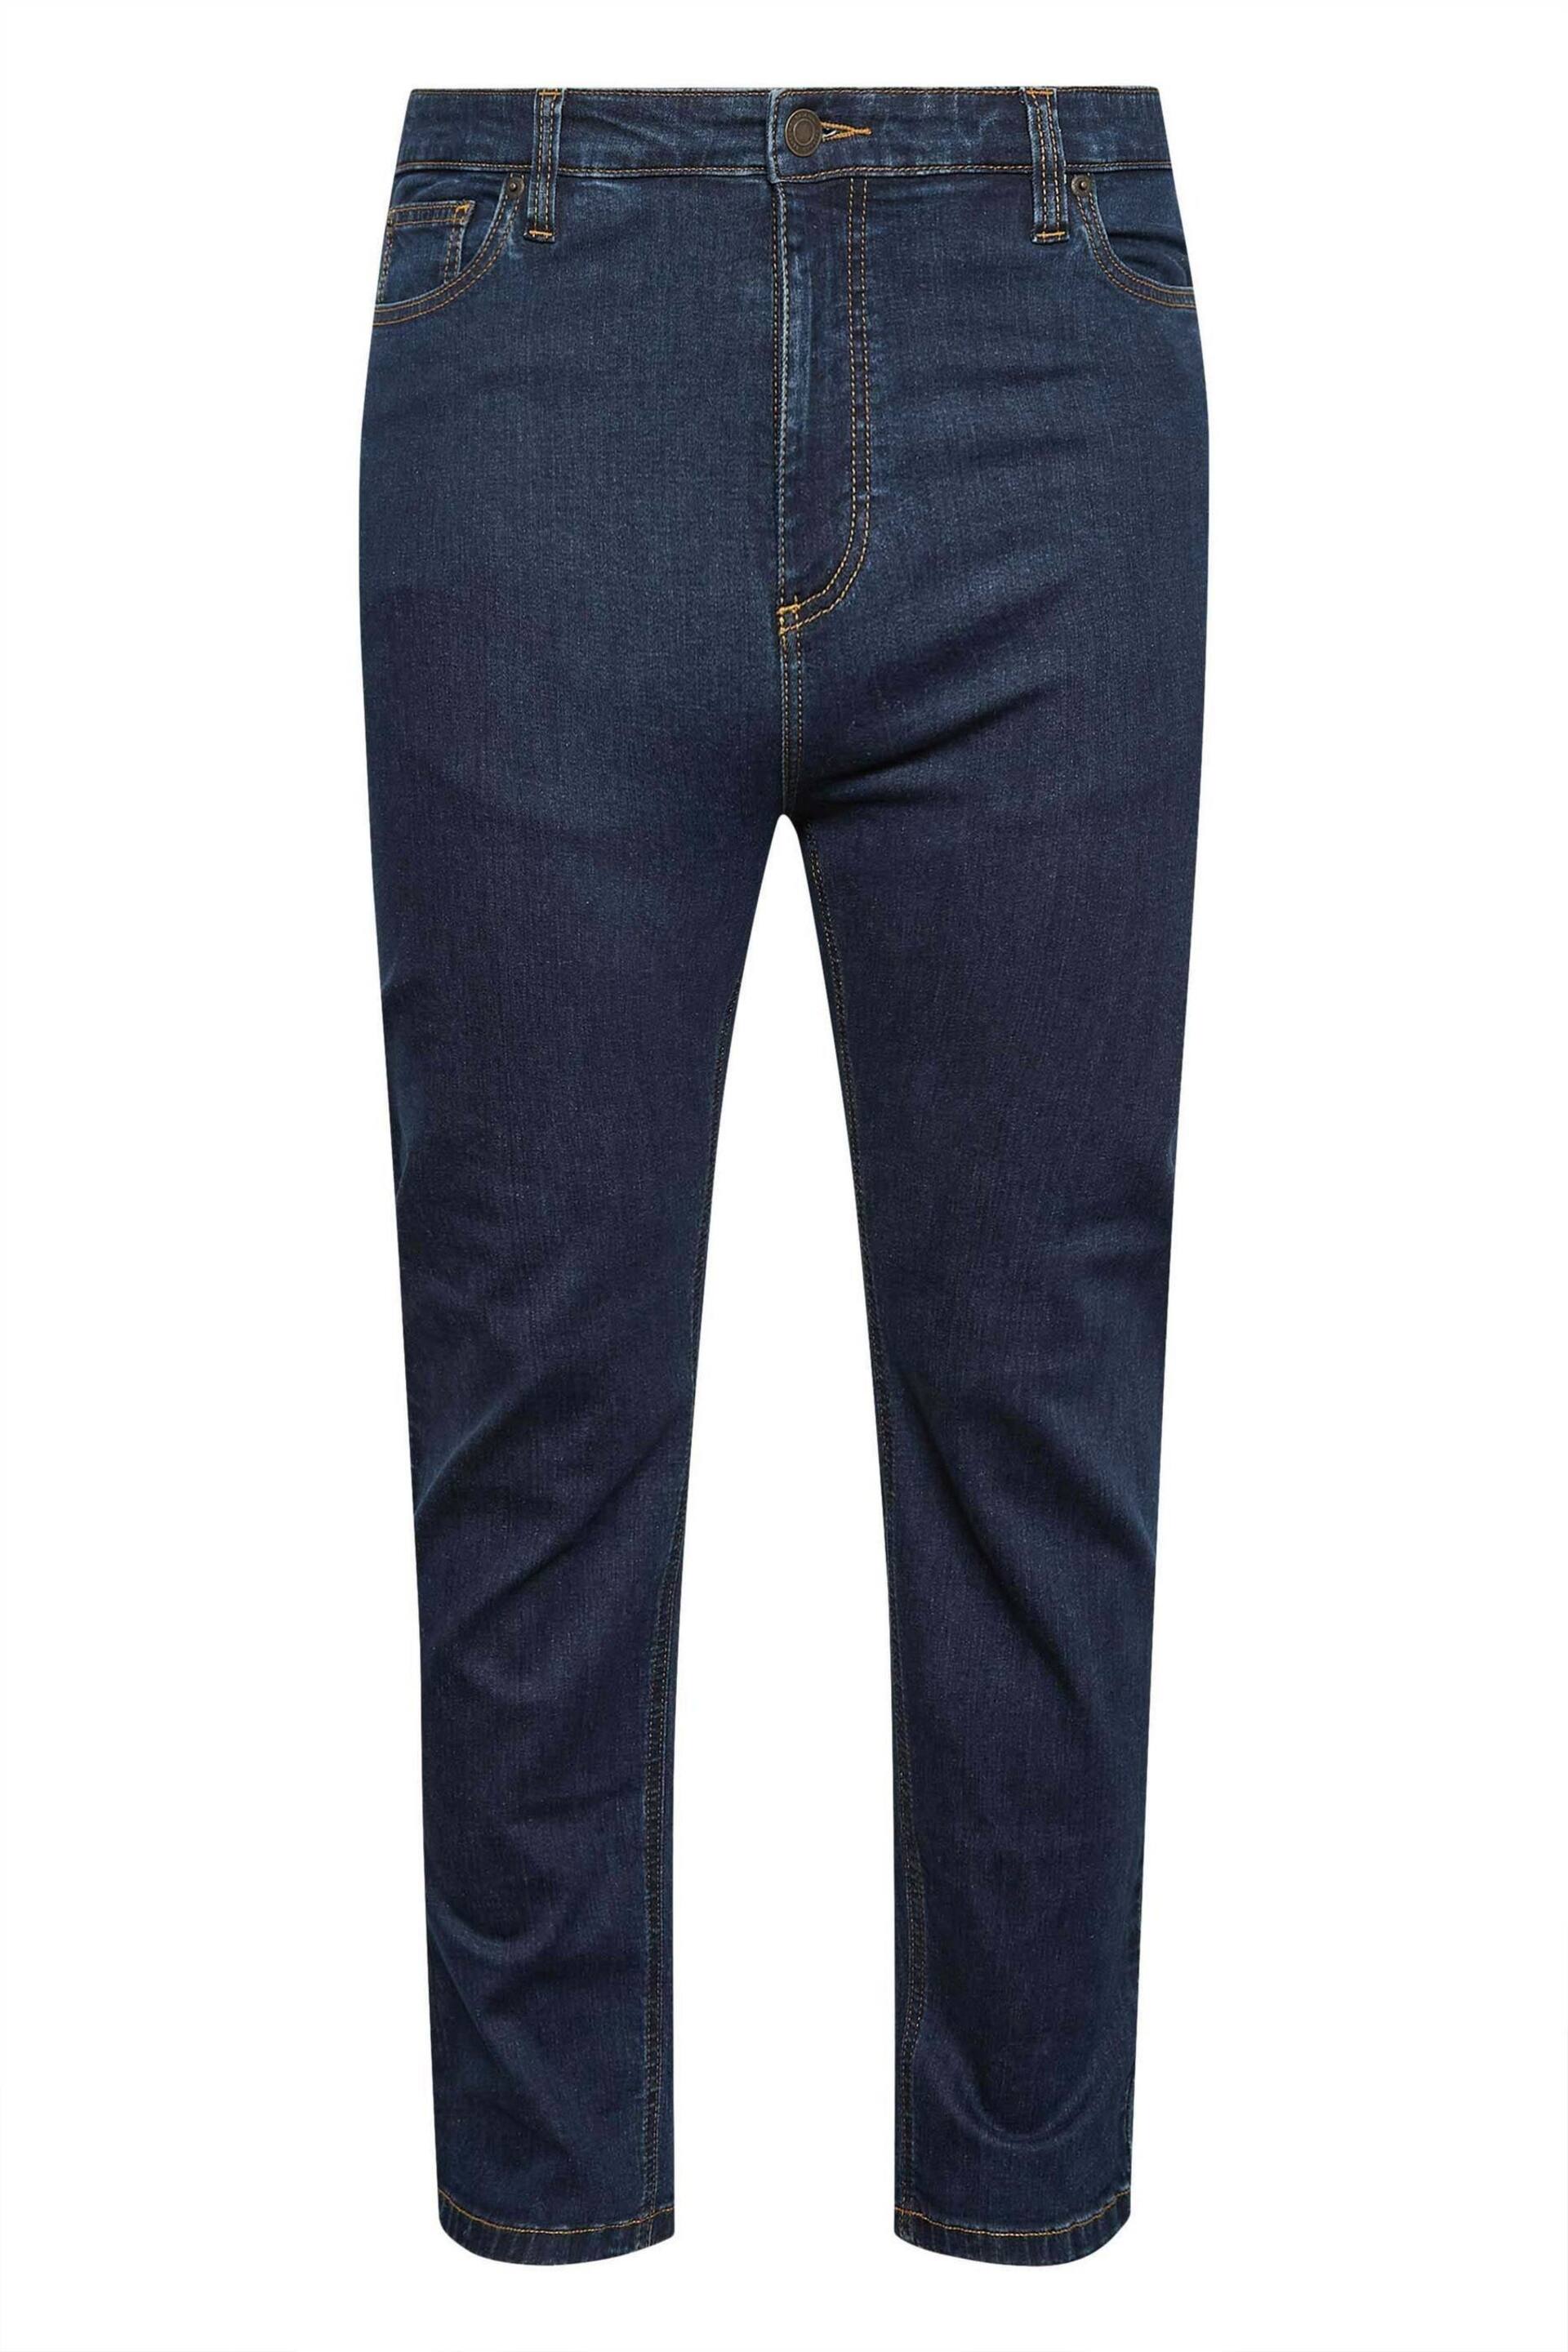 BadRhino Big & Tall Blue Stretch Leg Jeans - Image 3 of 5